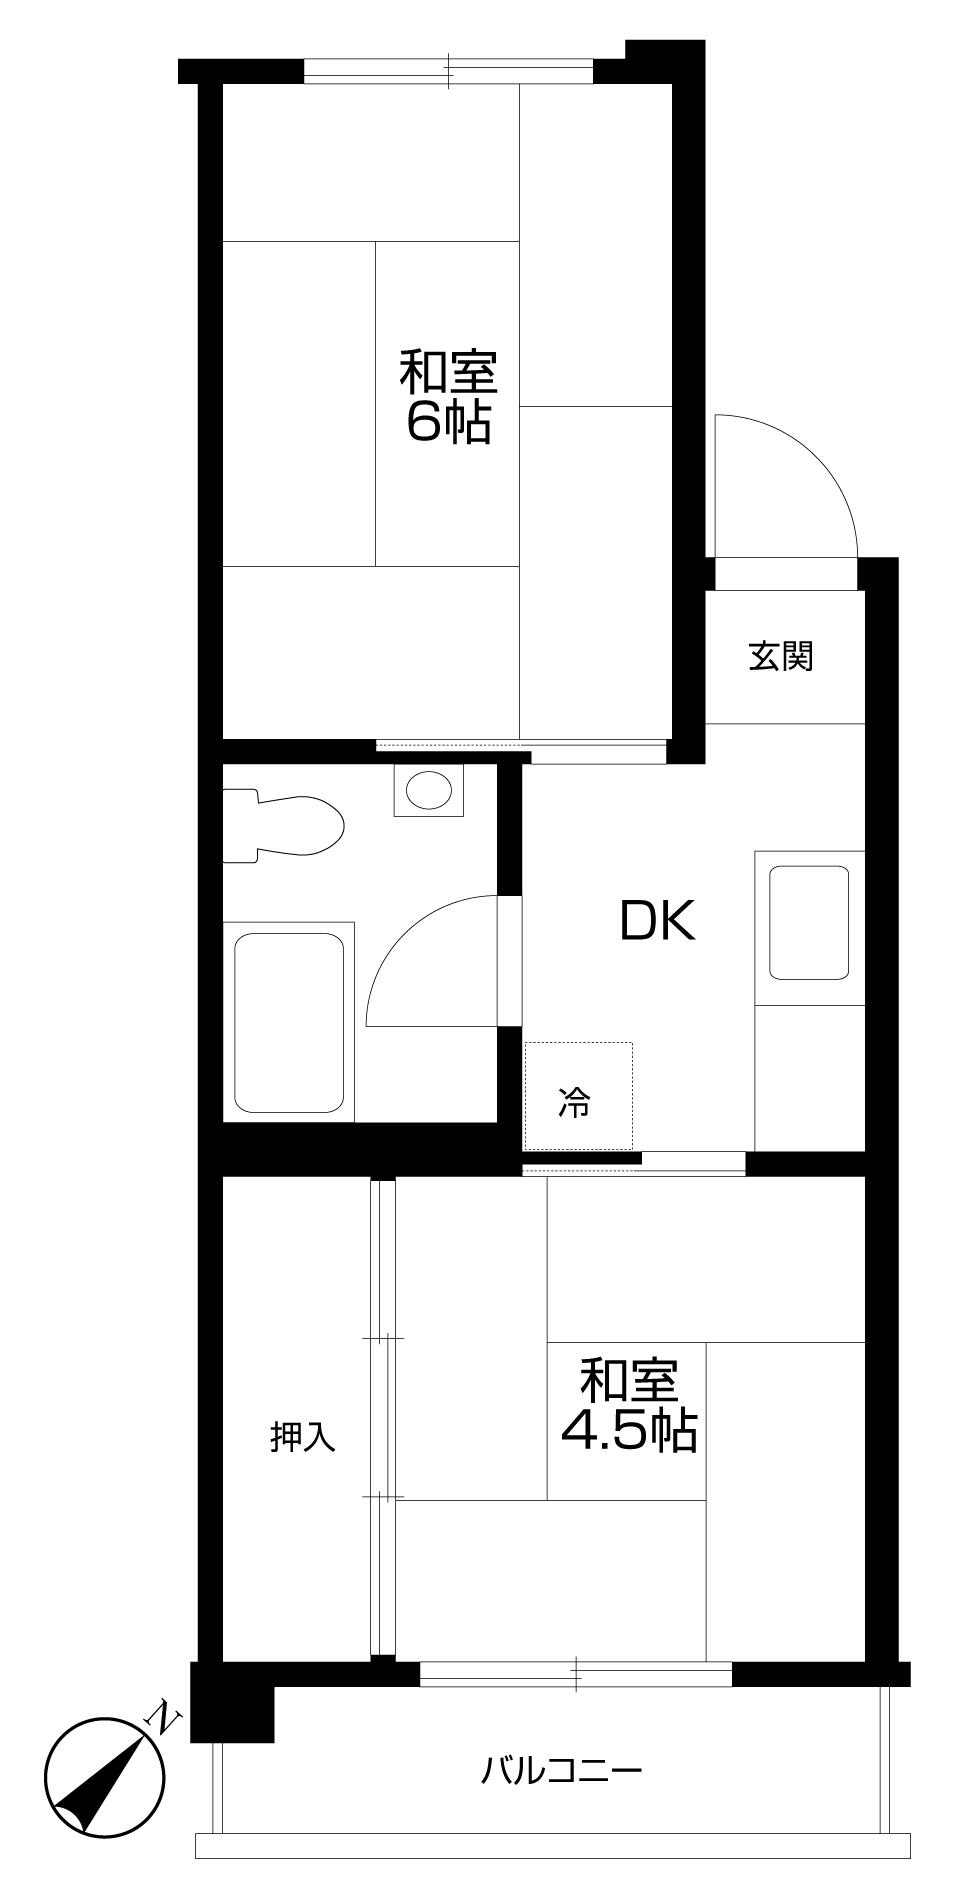 Floor plan. 2DK, Price 9 million yen, Occupied area 28.62 sq m , Balcony area 3.5 sq m